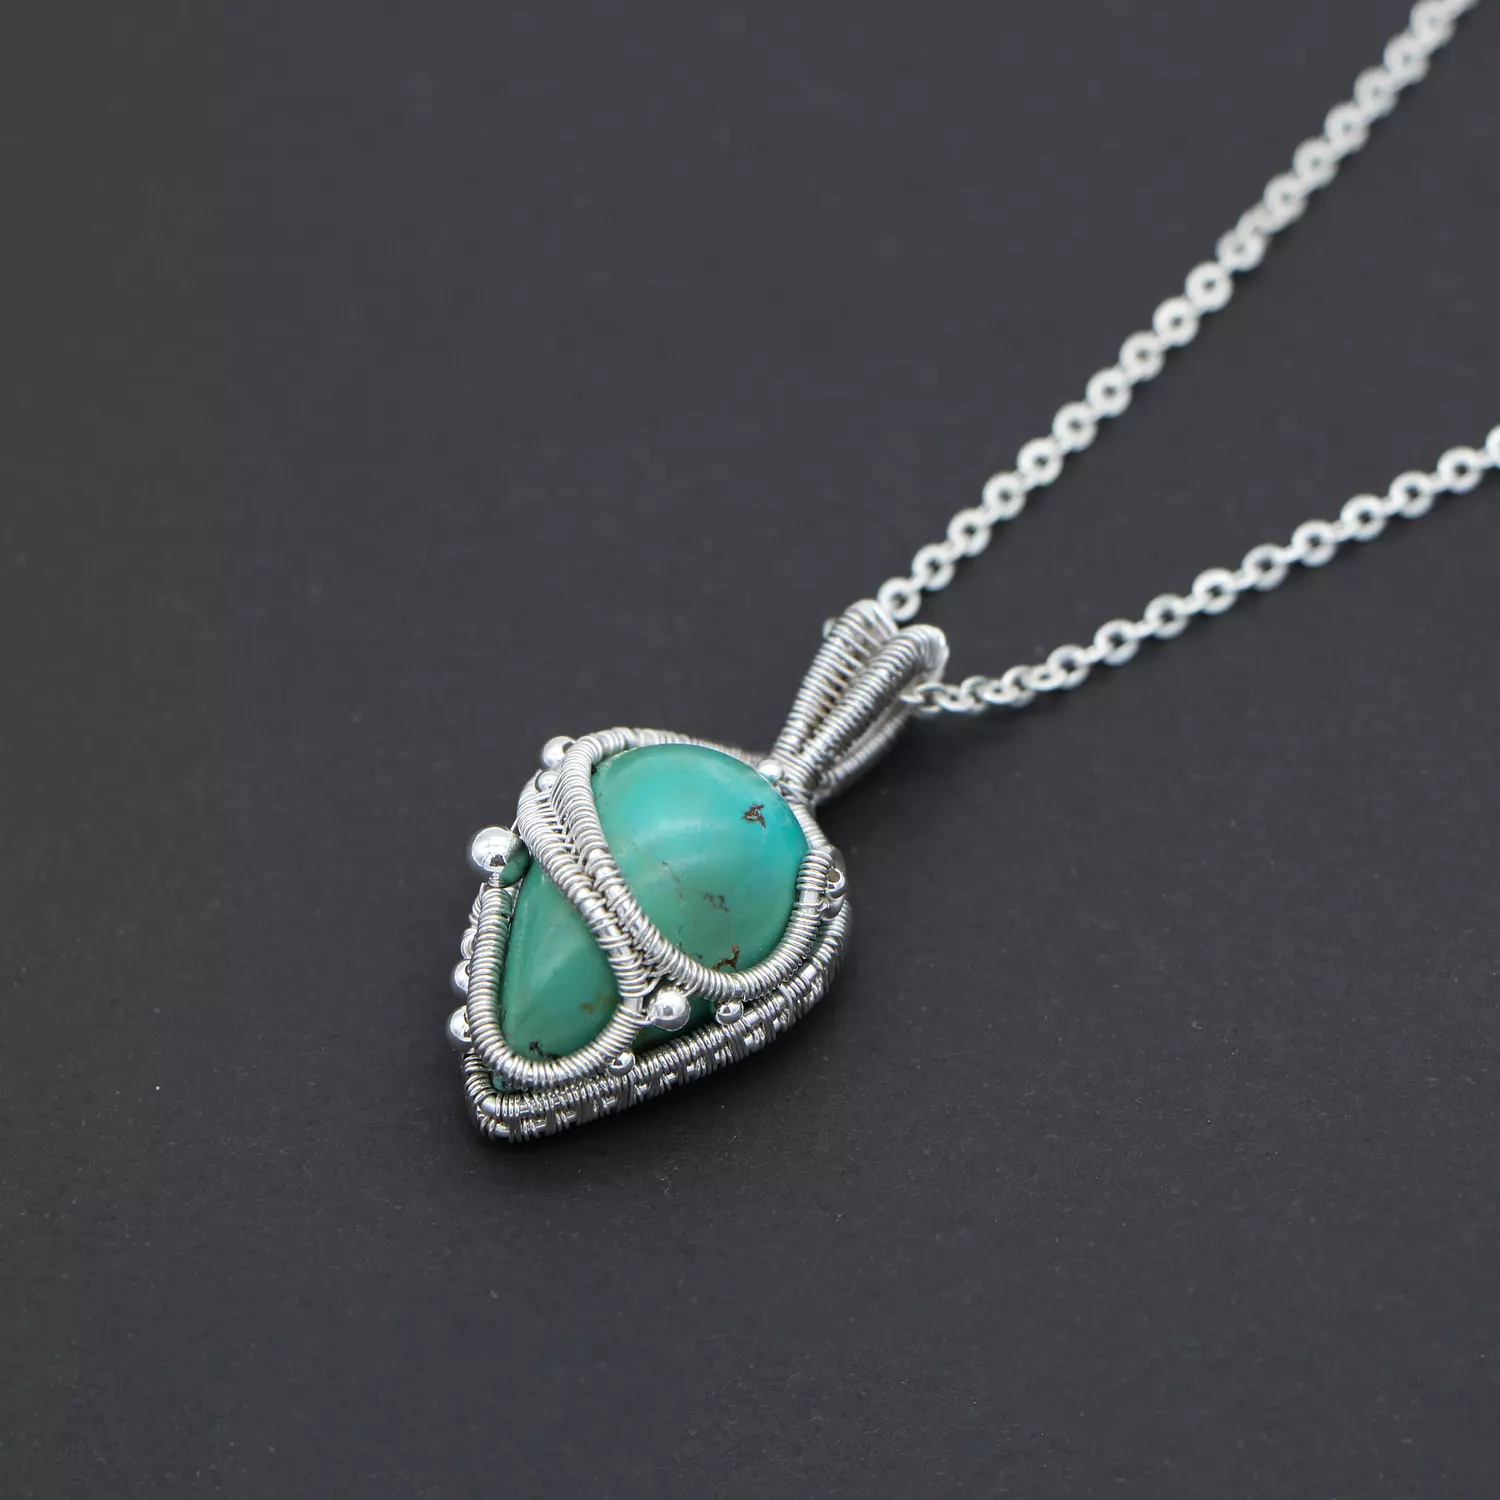 Pendant with turquoise gemstone. 0